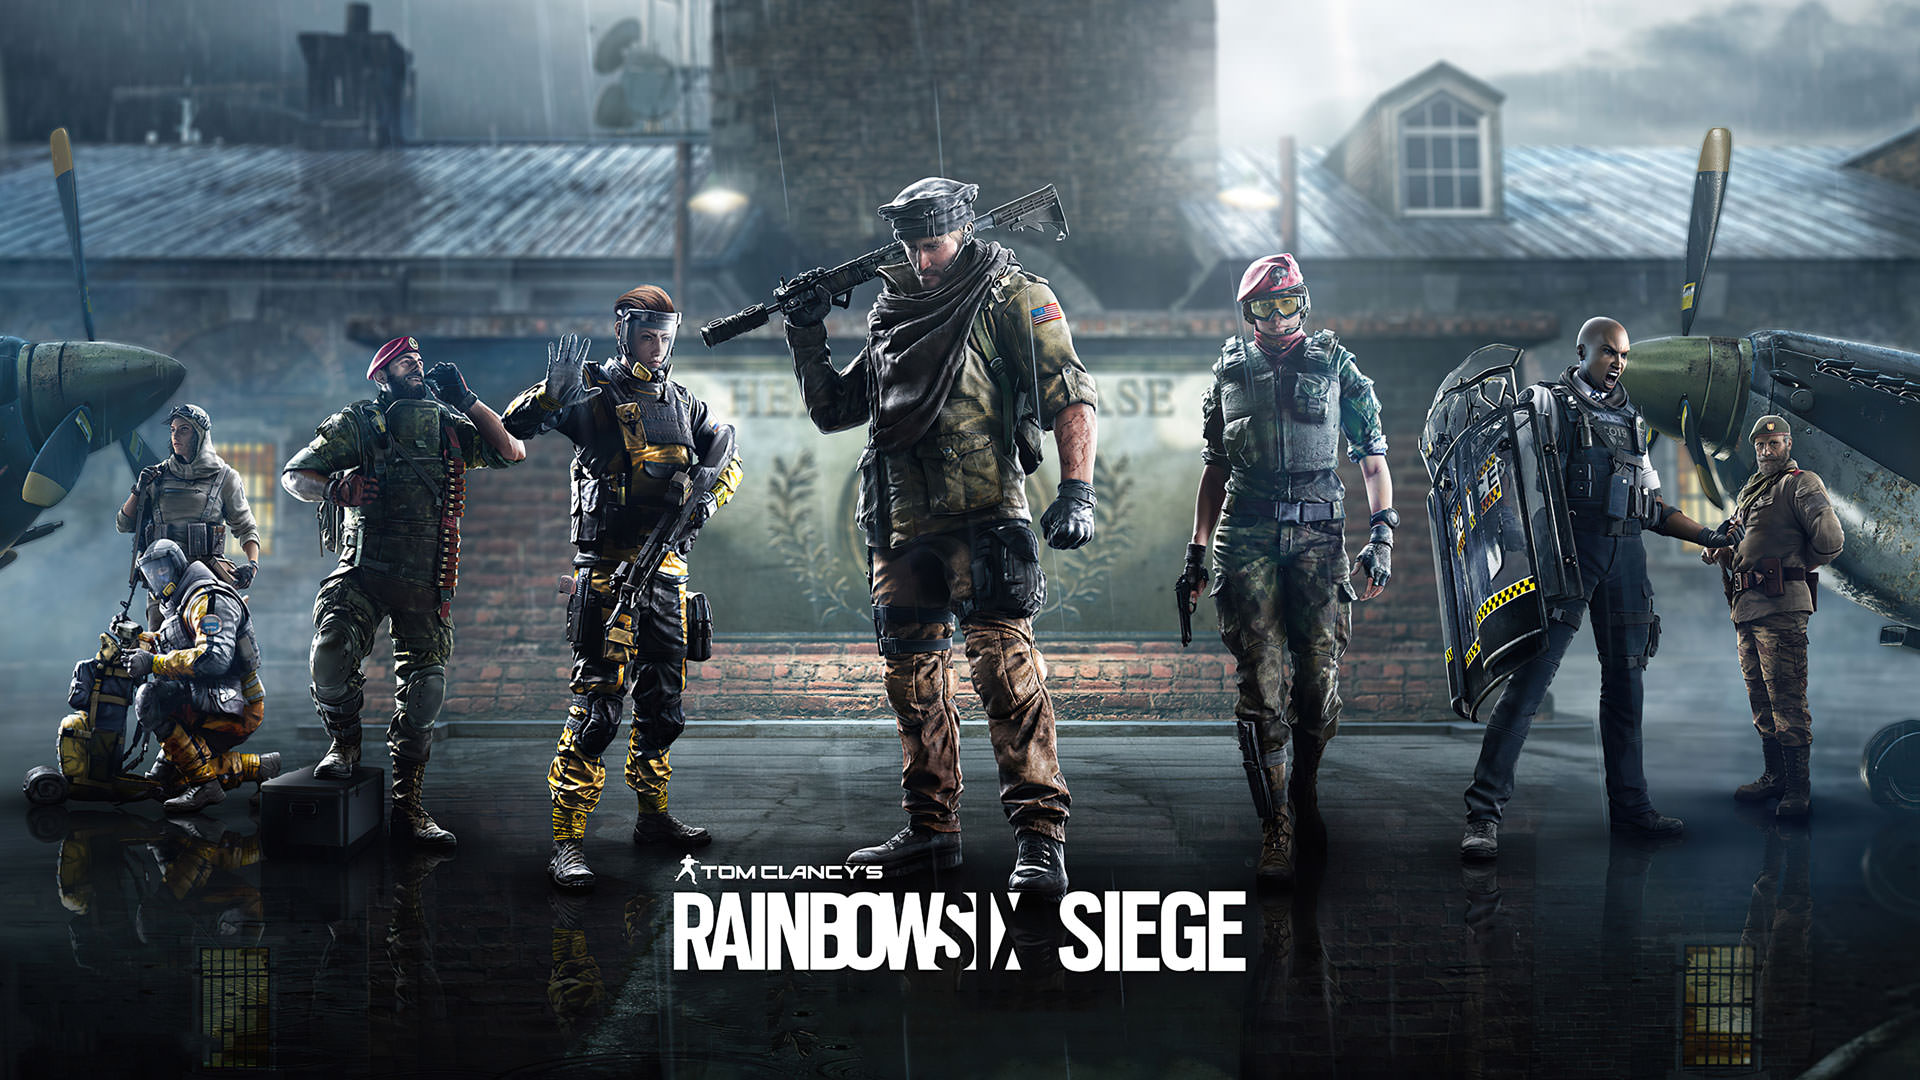 Rainbow Six Siege game characters